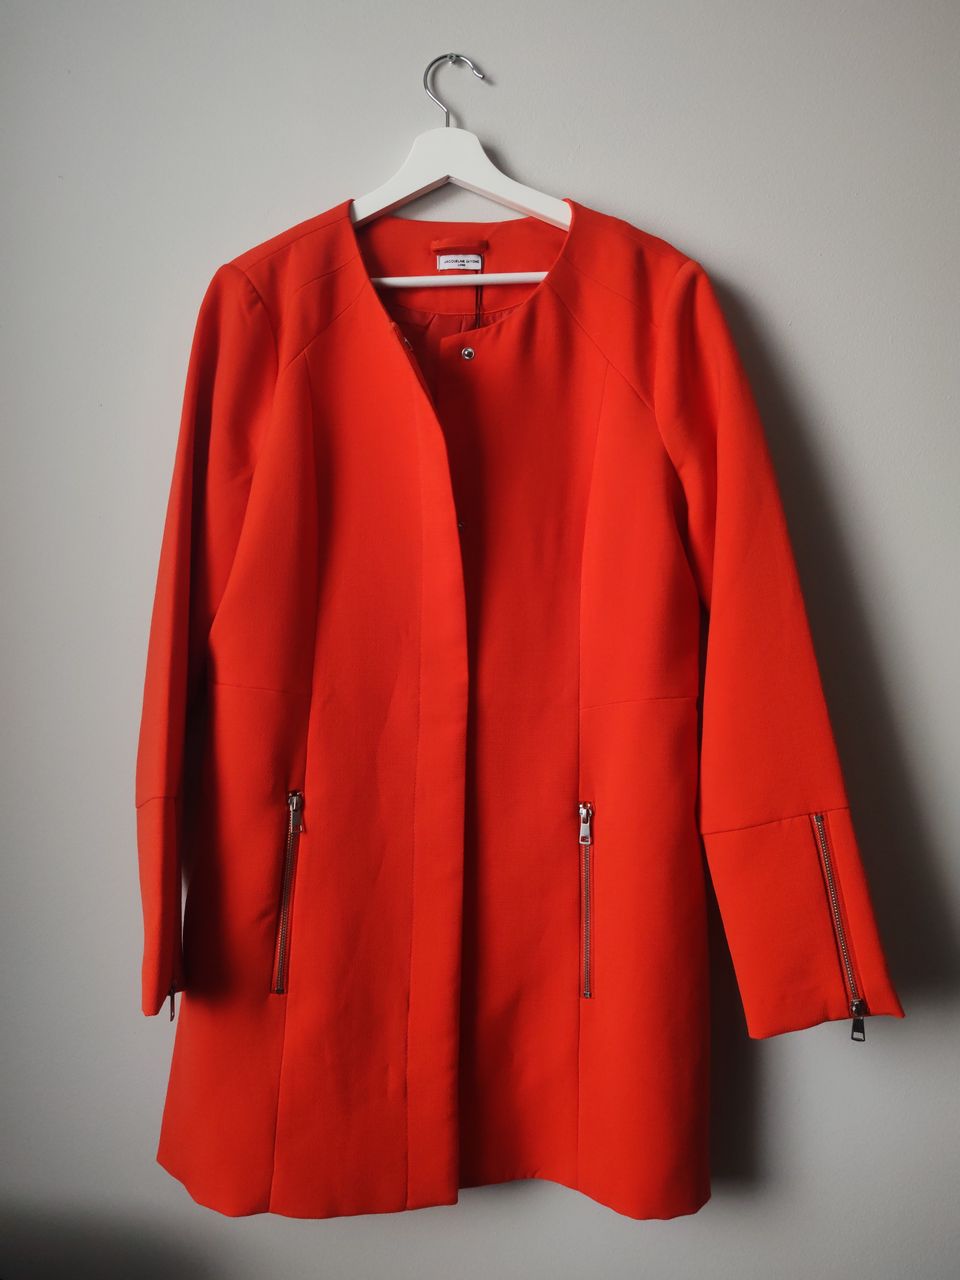 Punainen juhlavampi takki